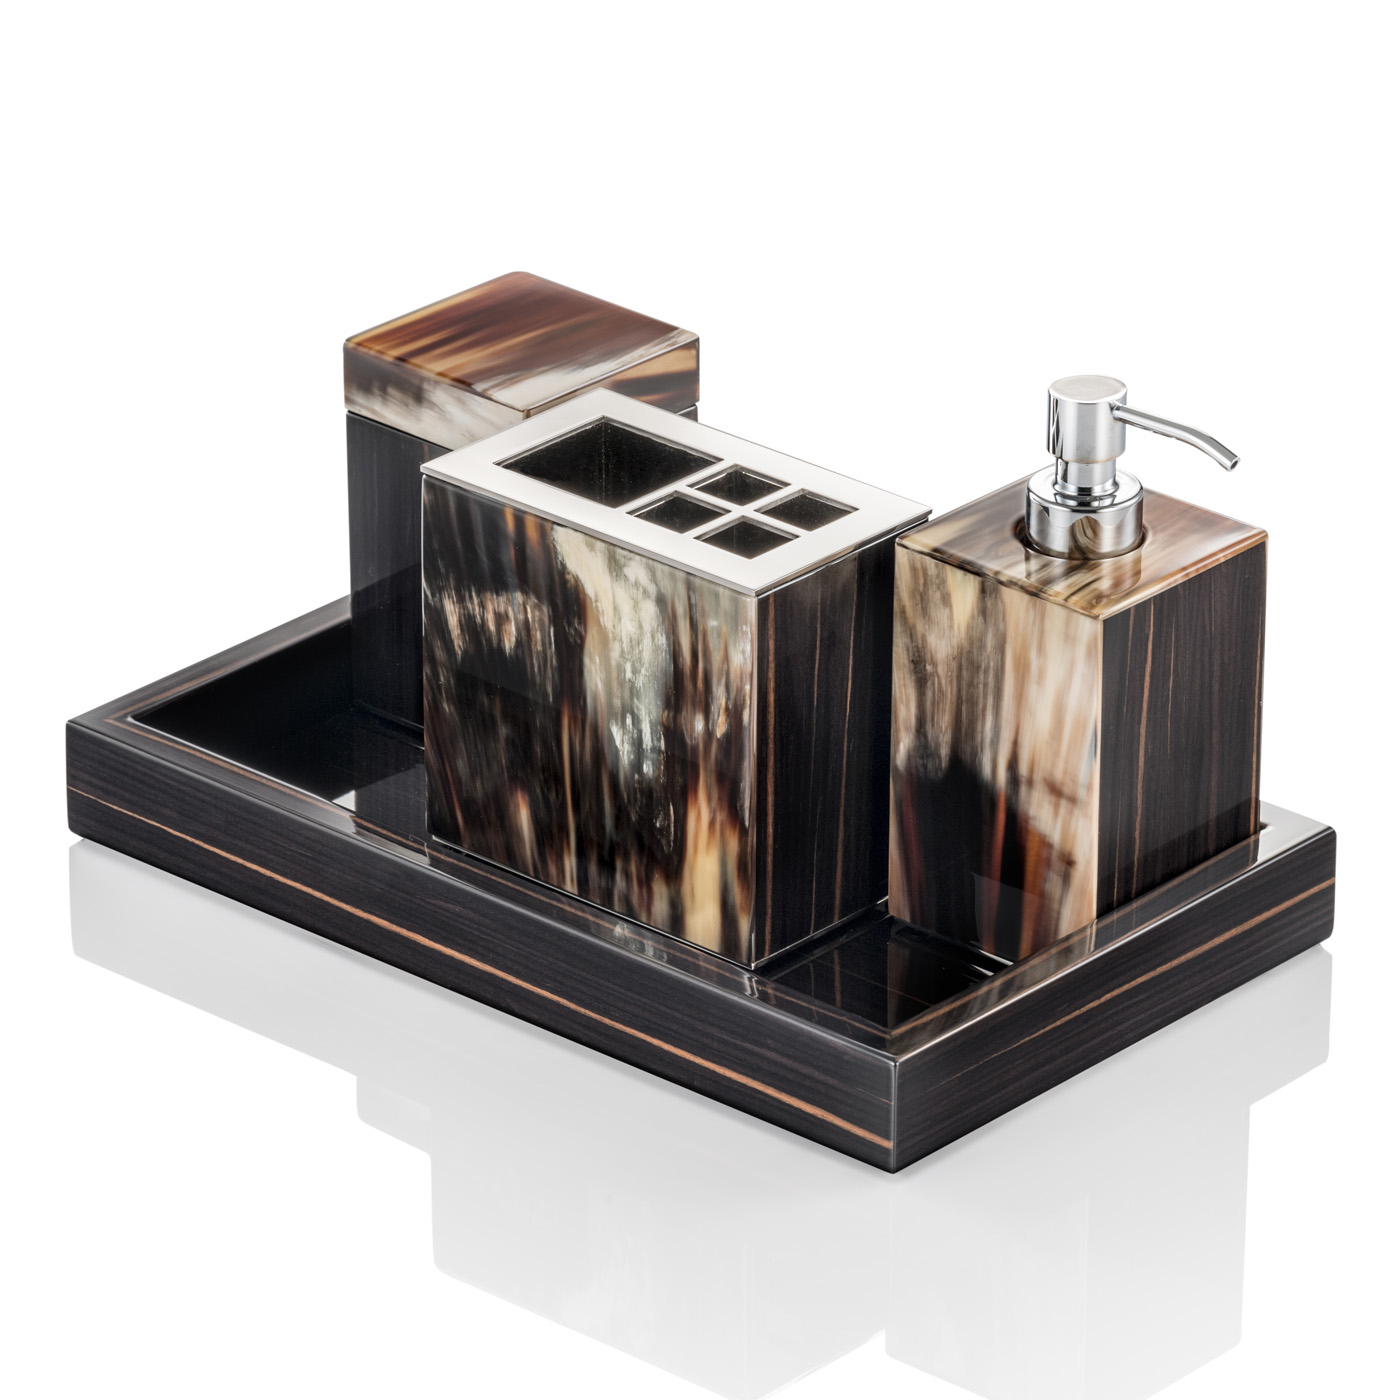 Bath sets - Iris bath set in horn and glossy ebony - detail - Arcahorn